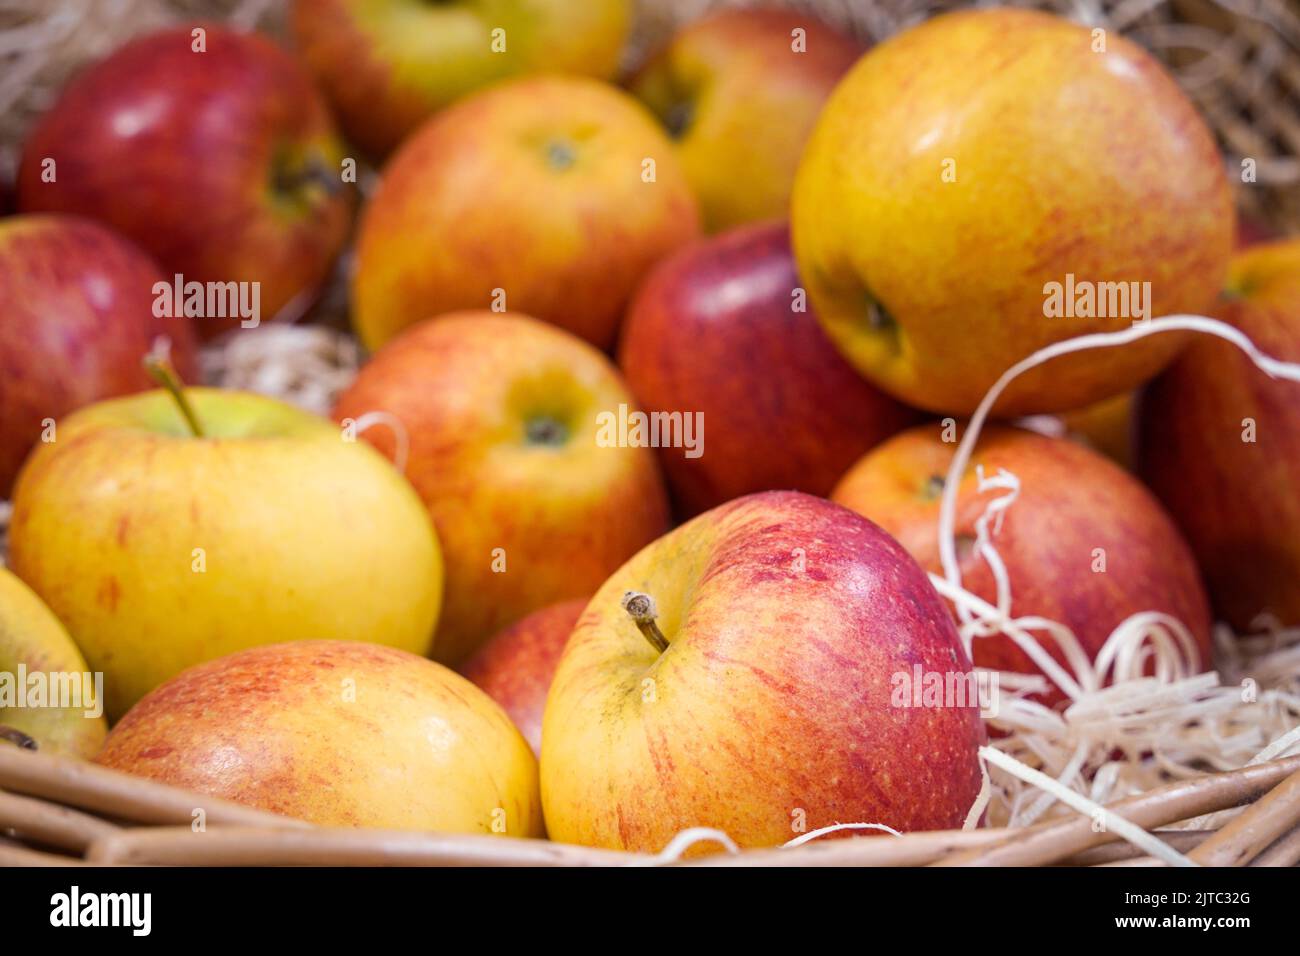 https://c8.alamy.com/comp/2JTC32G/basket-of-fresh-red-organic-gala-apples-2JTC32G.jpg